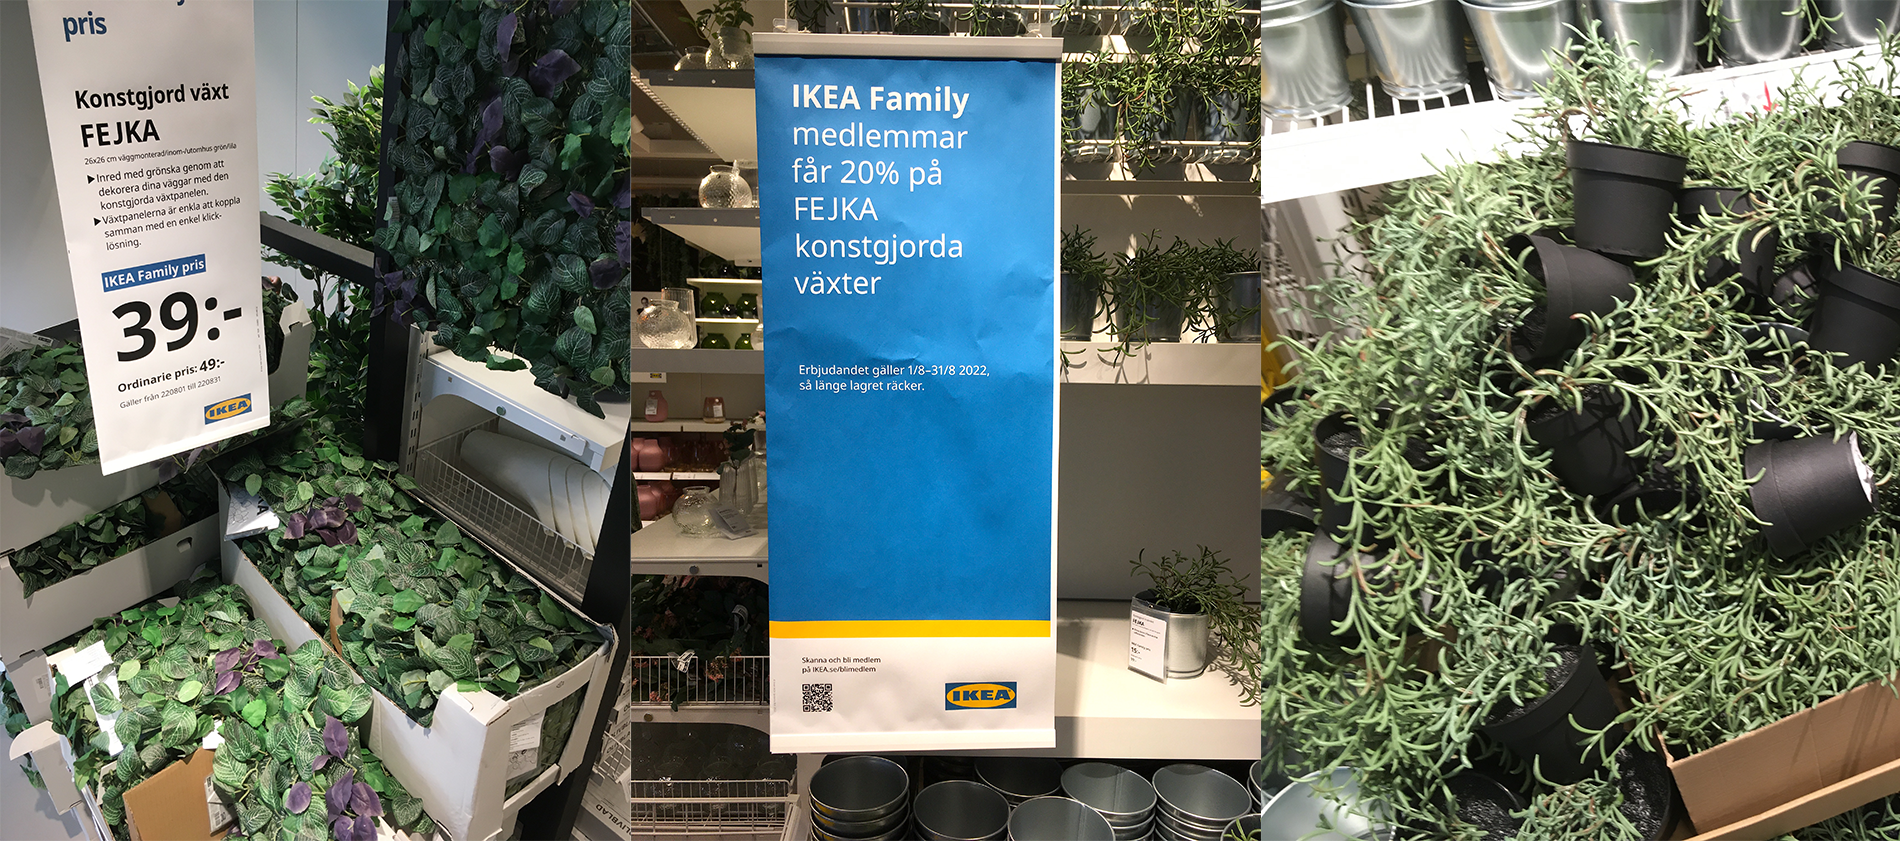 Ikea_Fejk_News